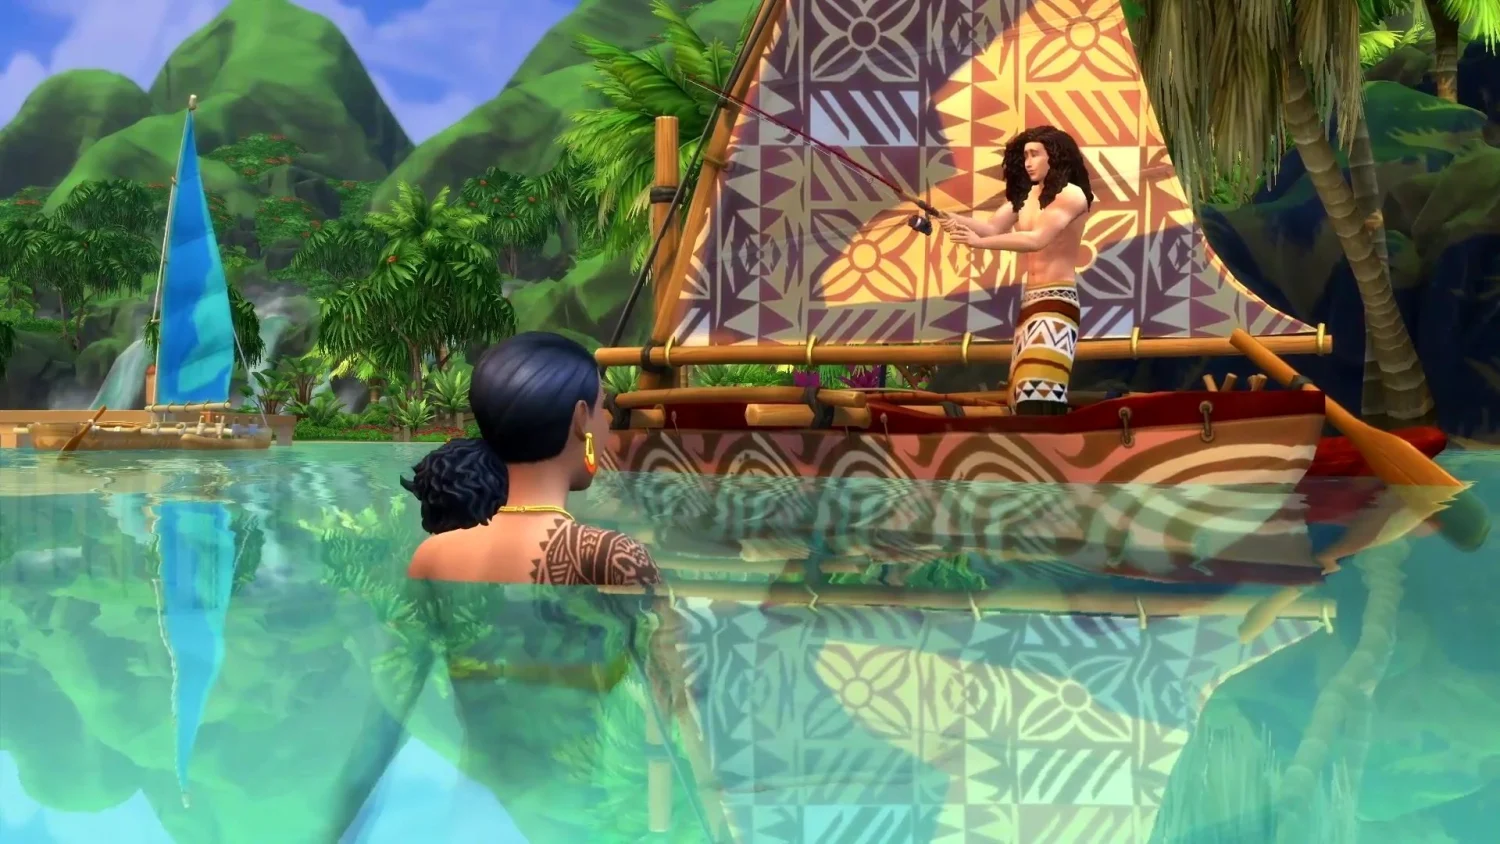 Jogo The sims 4 Island Living bundle Xbox One